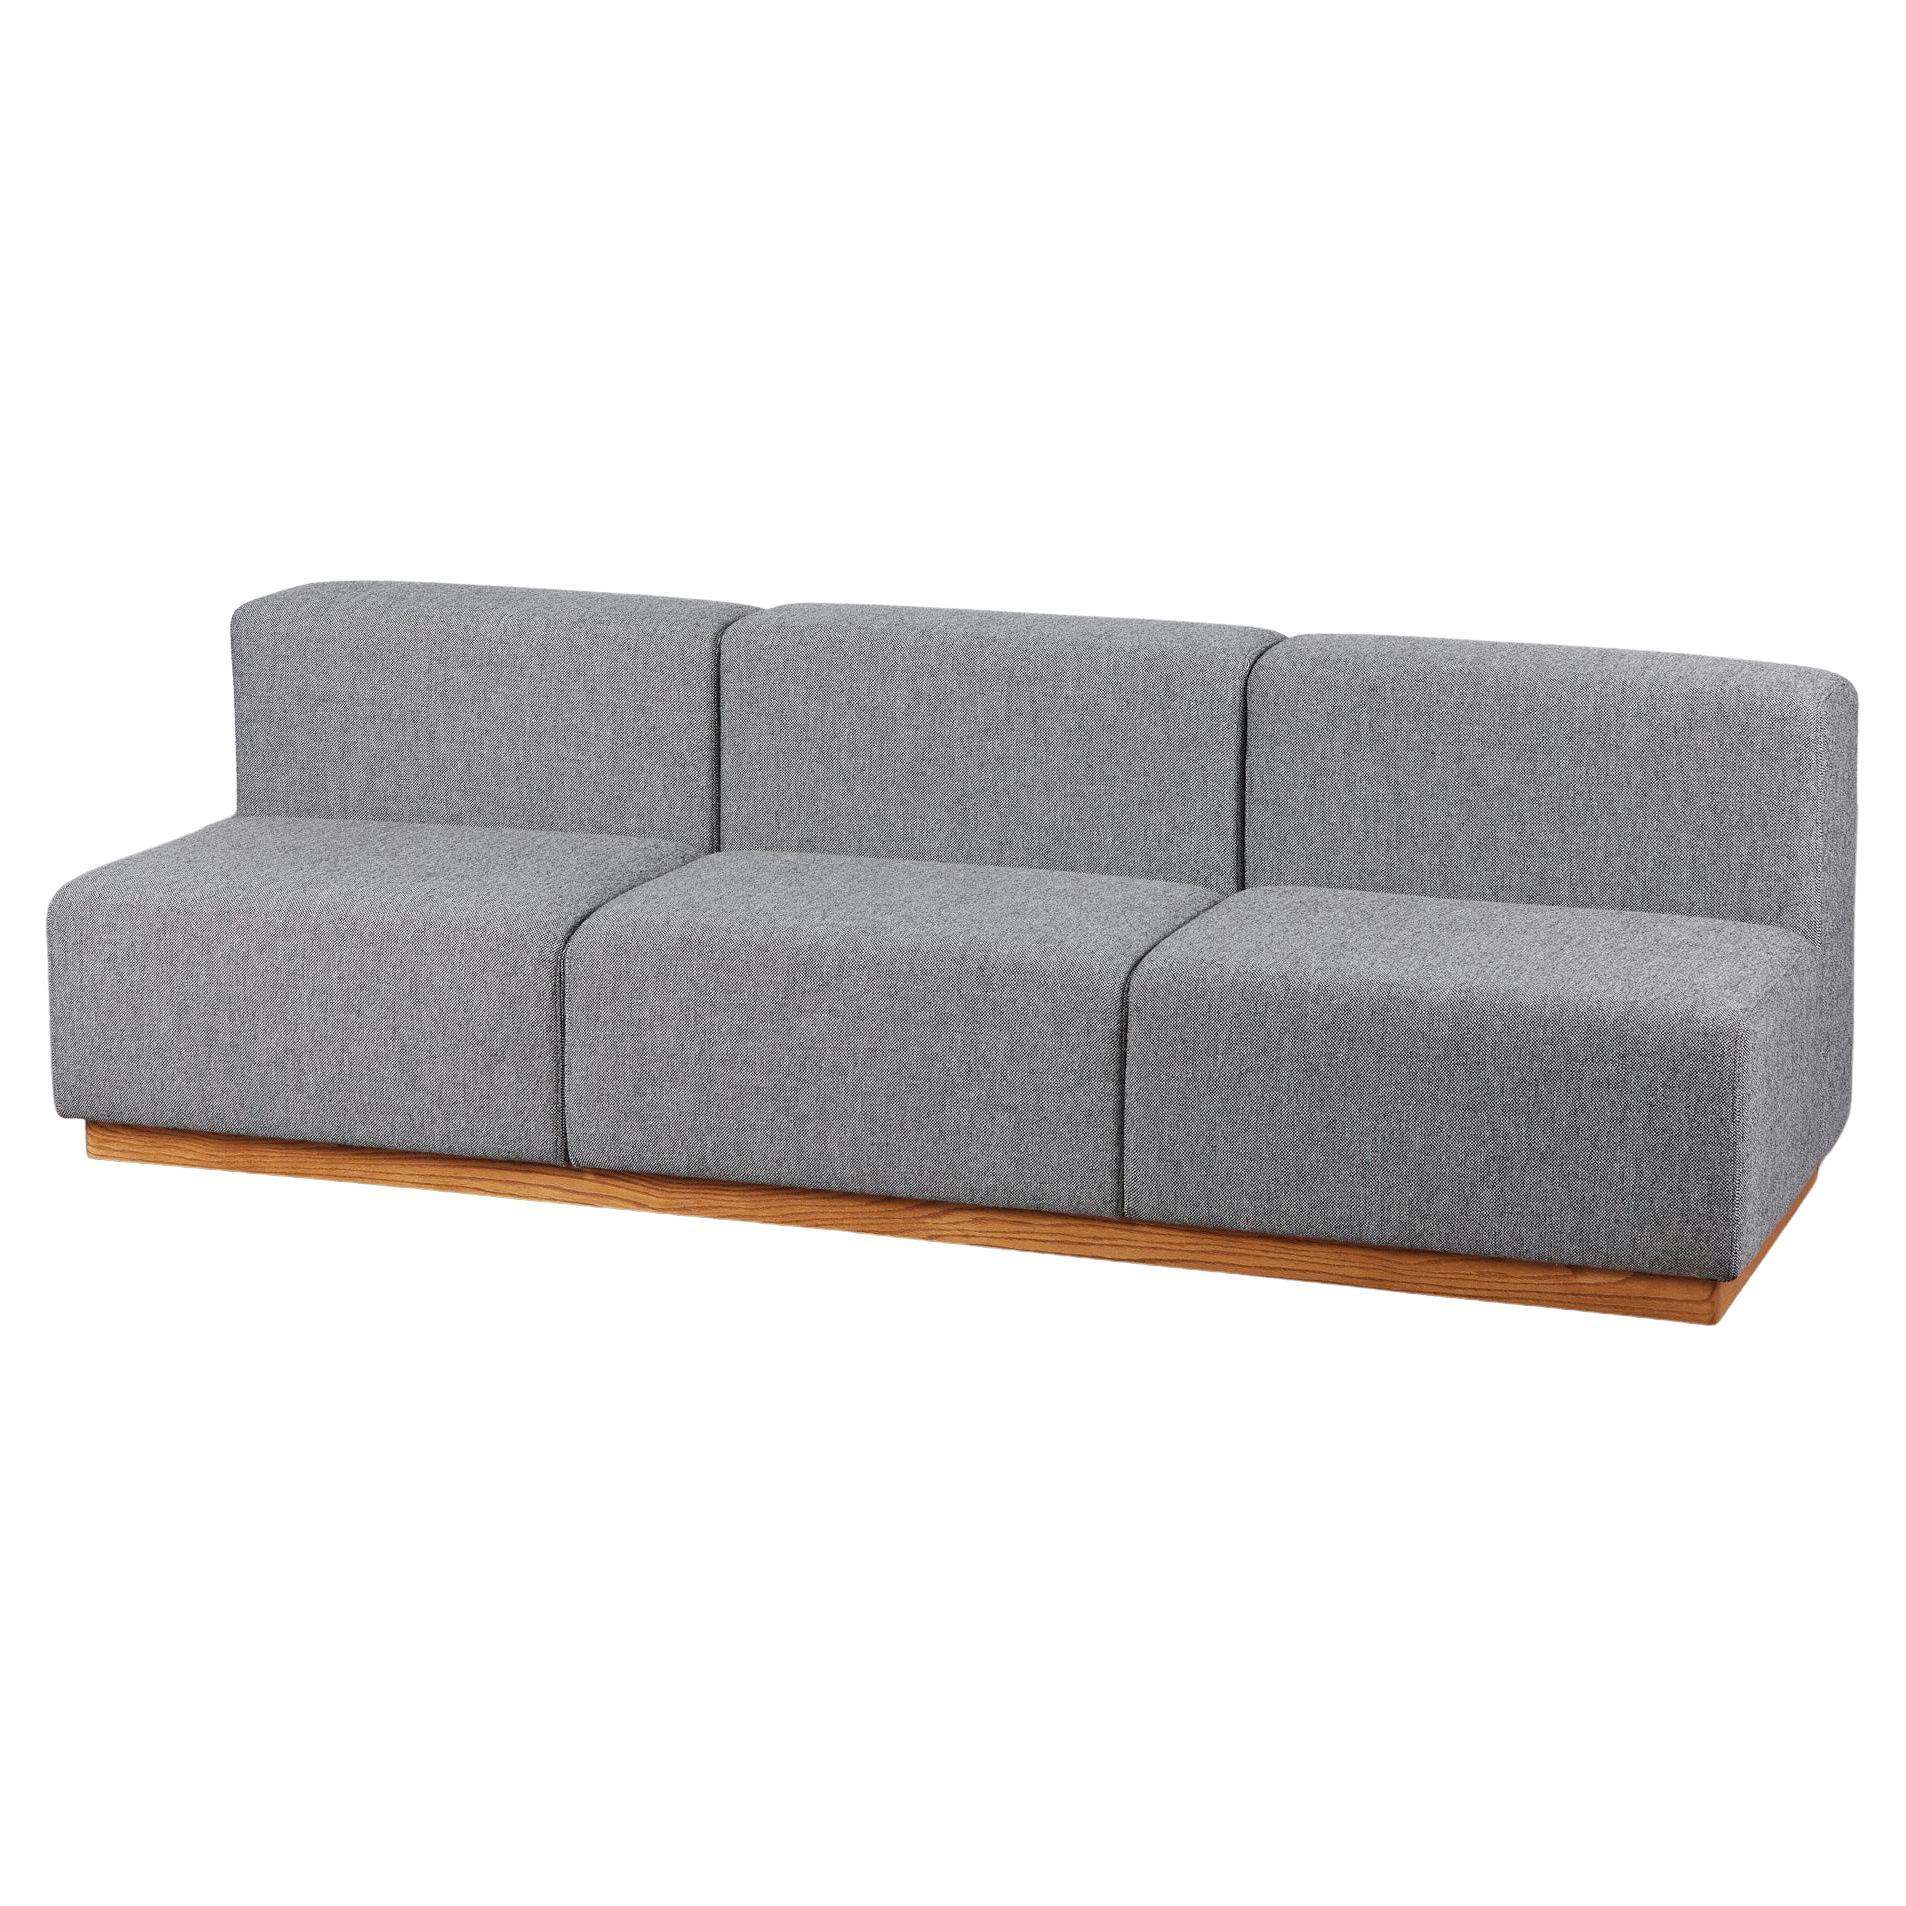 Giancarlo Piretti Style Modern Cubic Three Seater Sofa For Sale